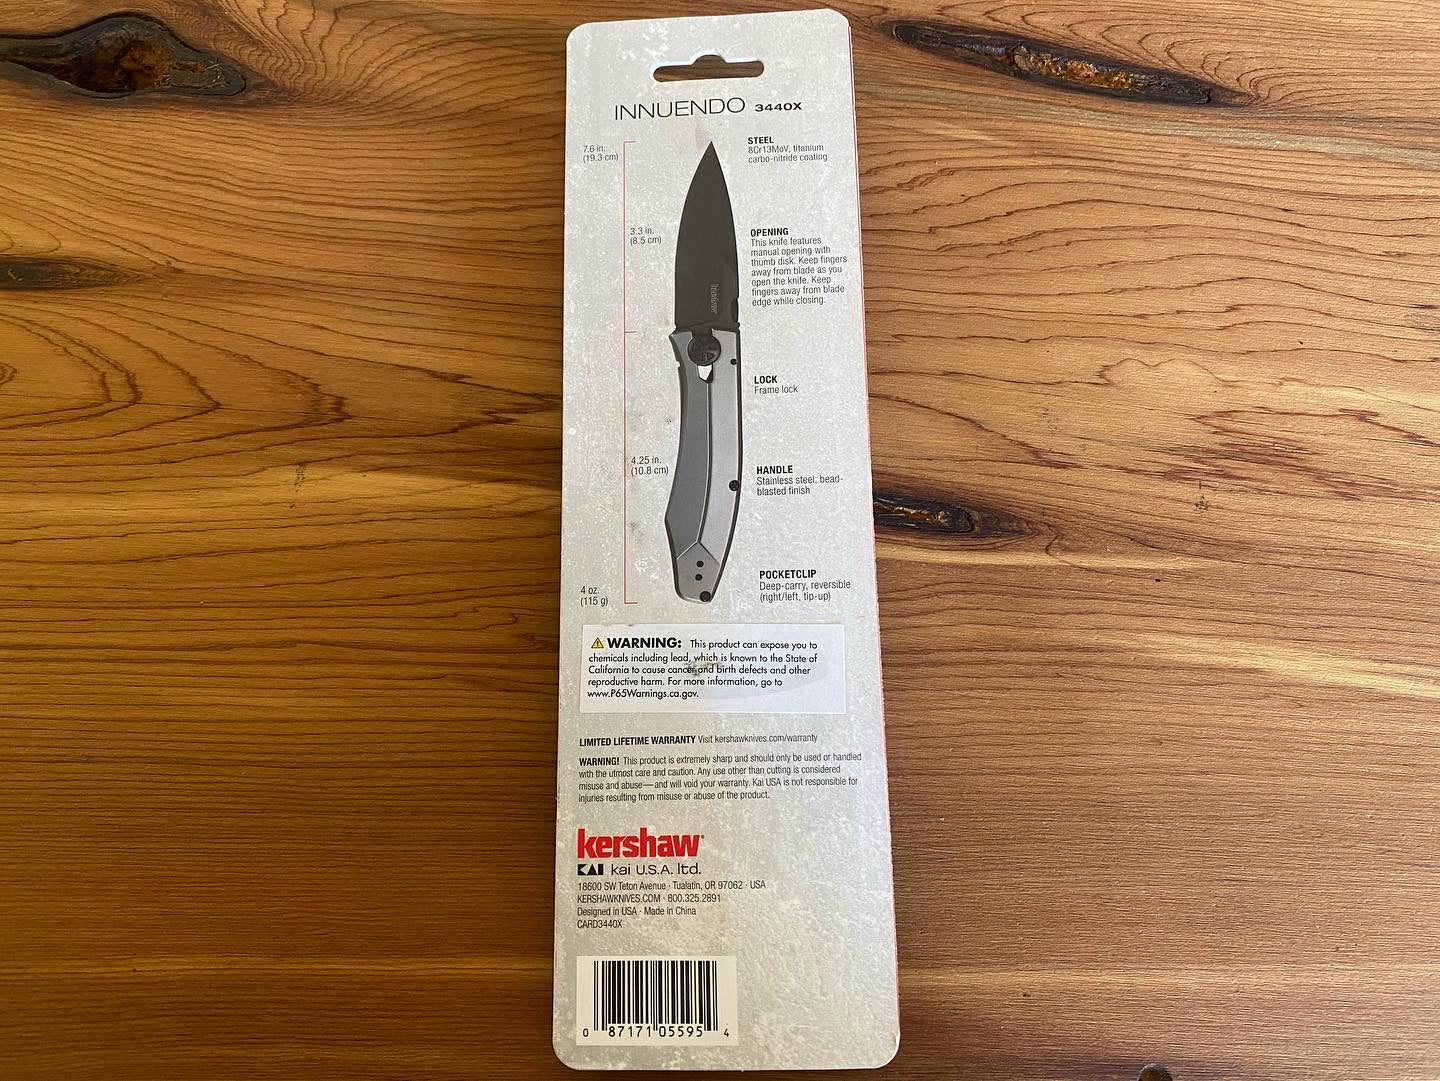 Kershaw Innuendo pocket knife